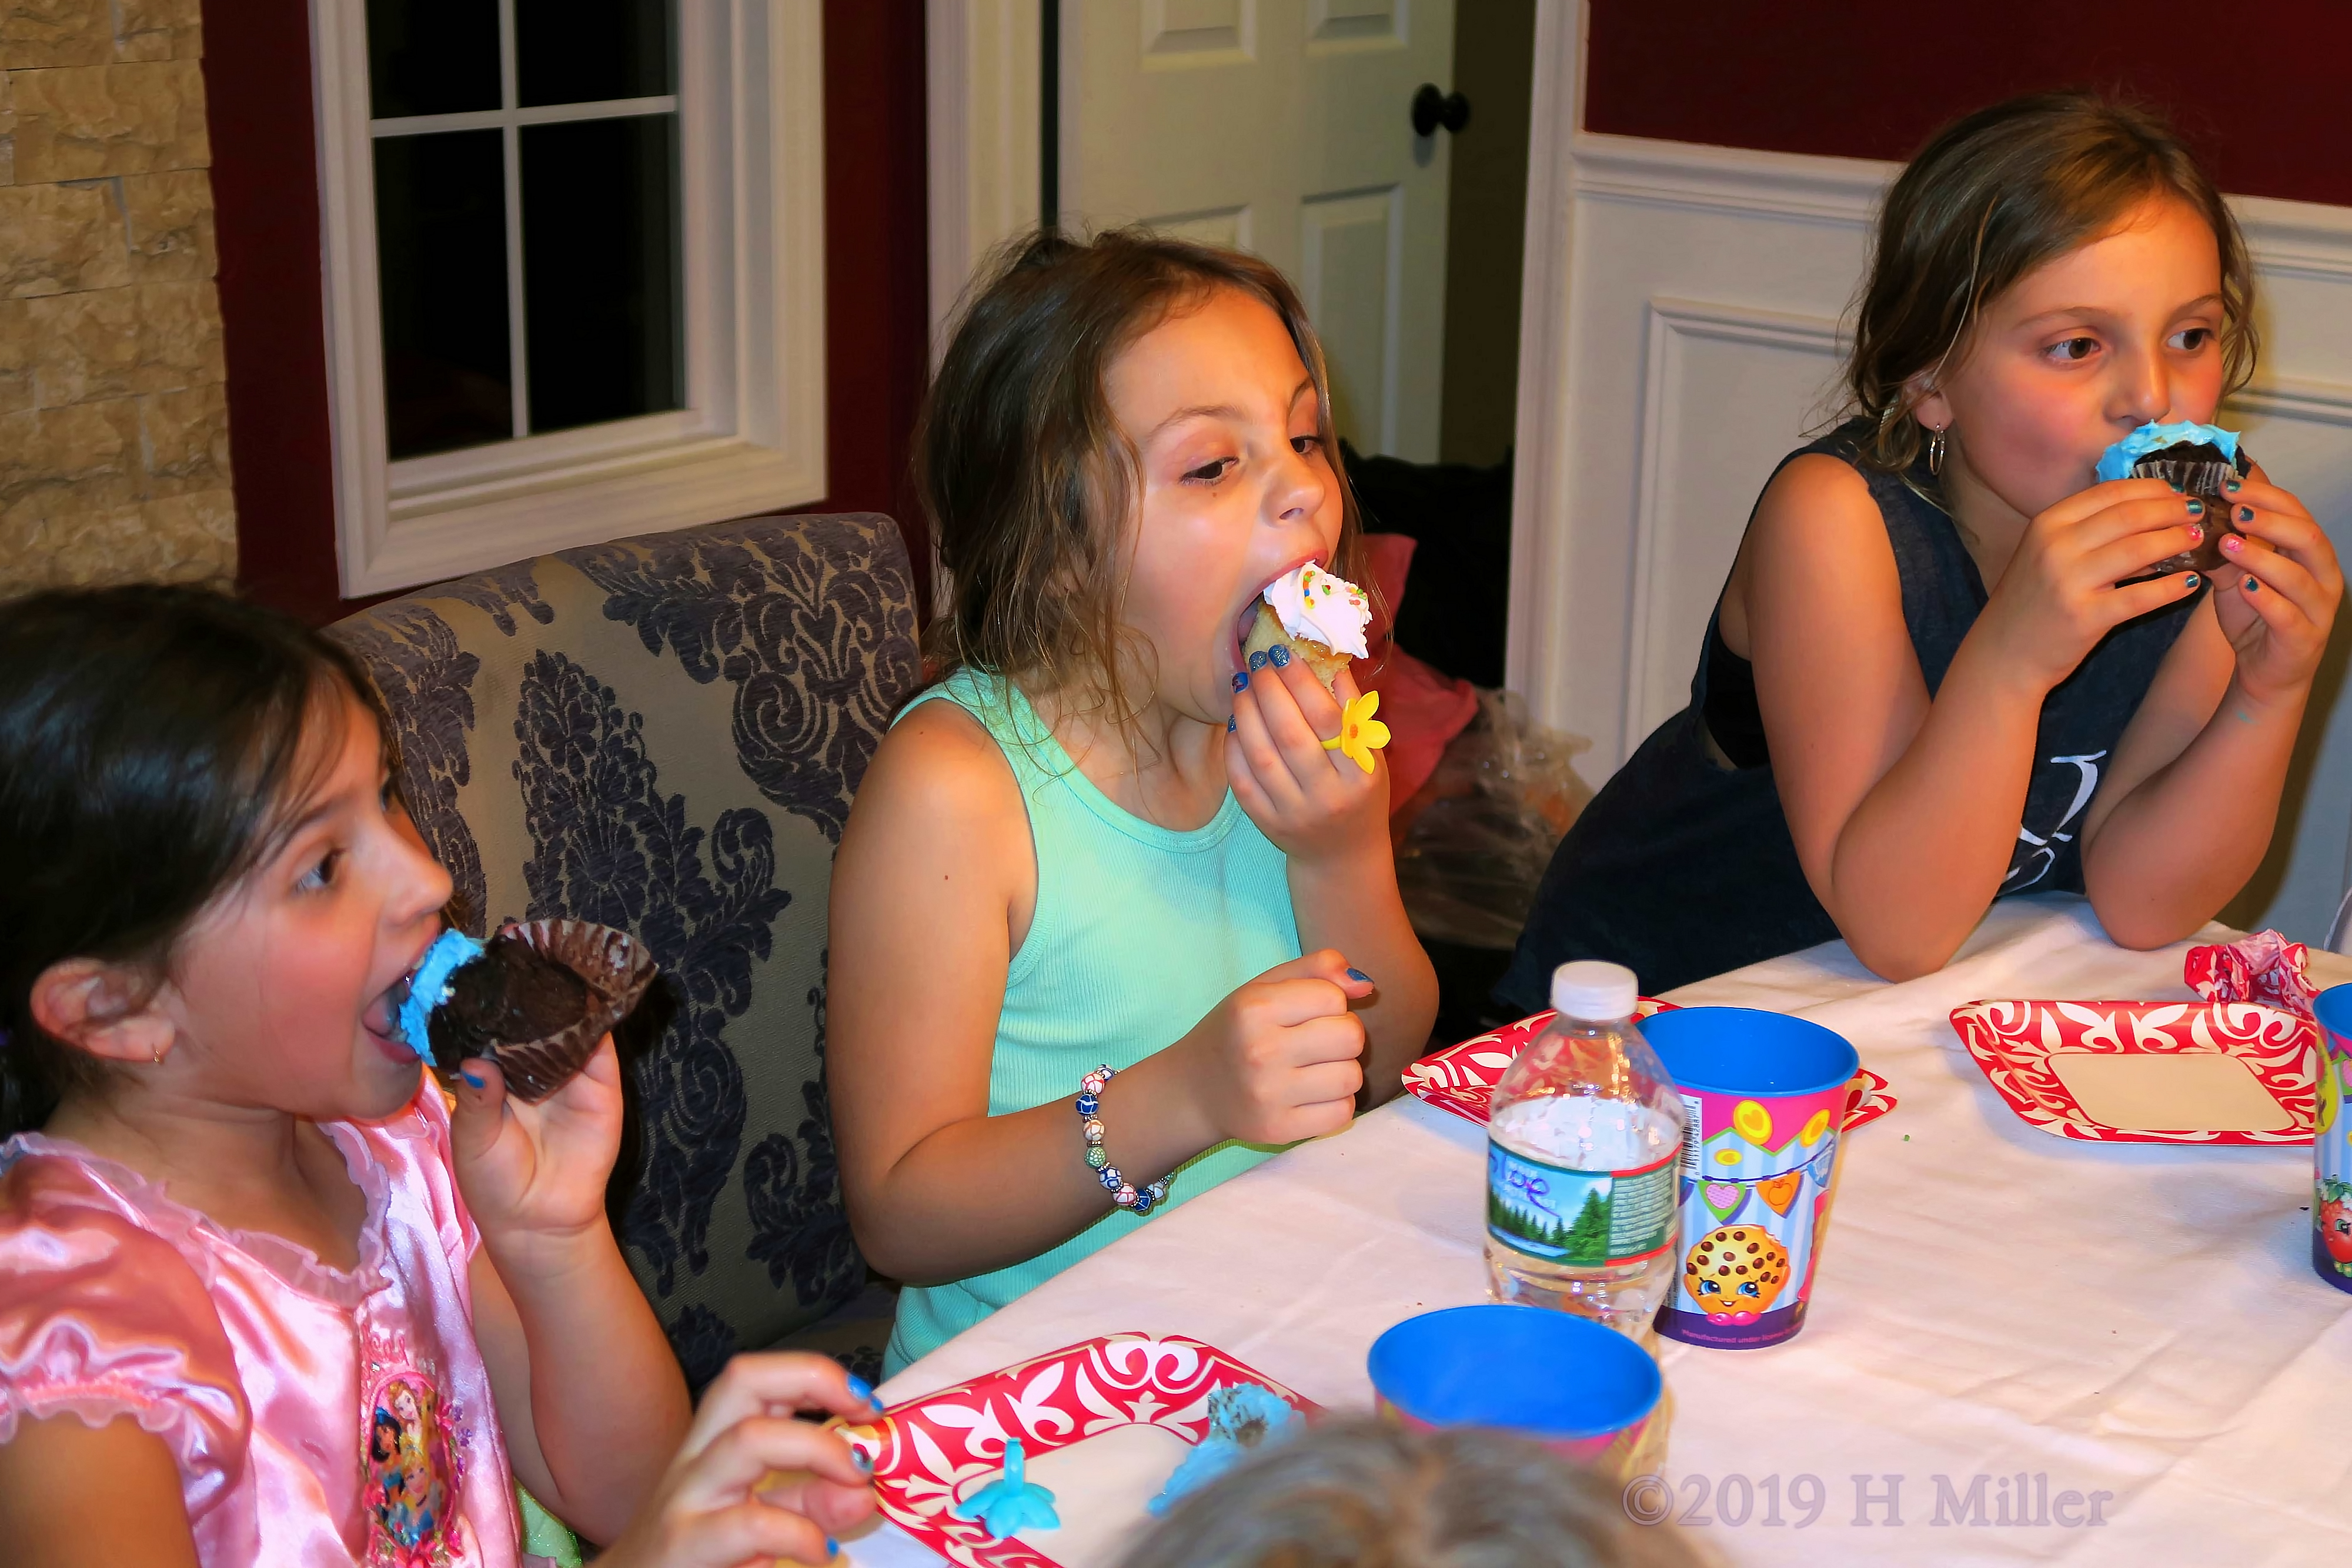 Yum Yum Cupcakes At The Kids Birthday Party! 